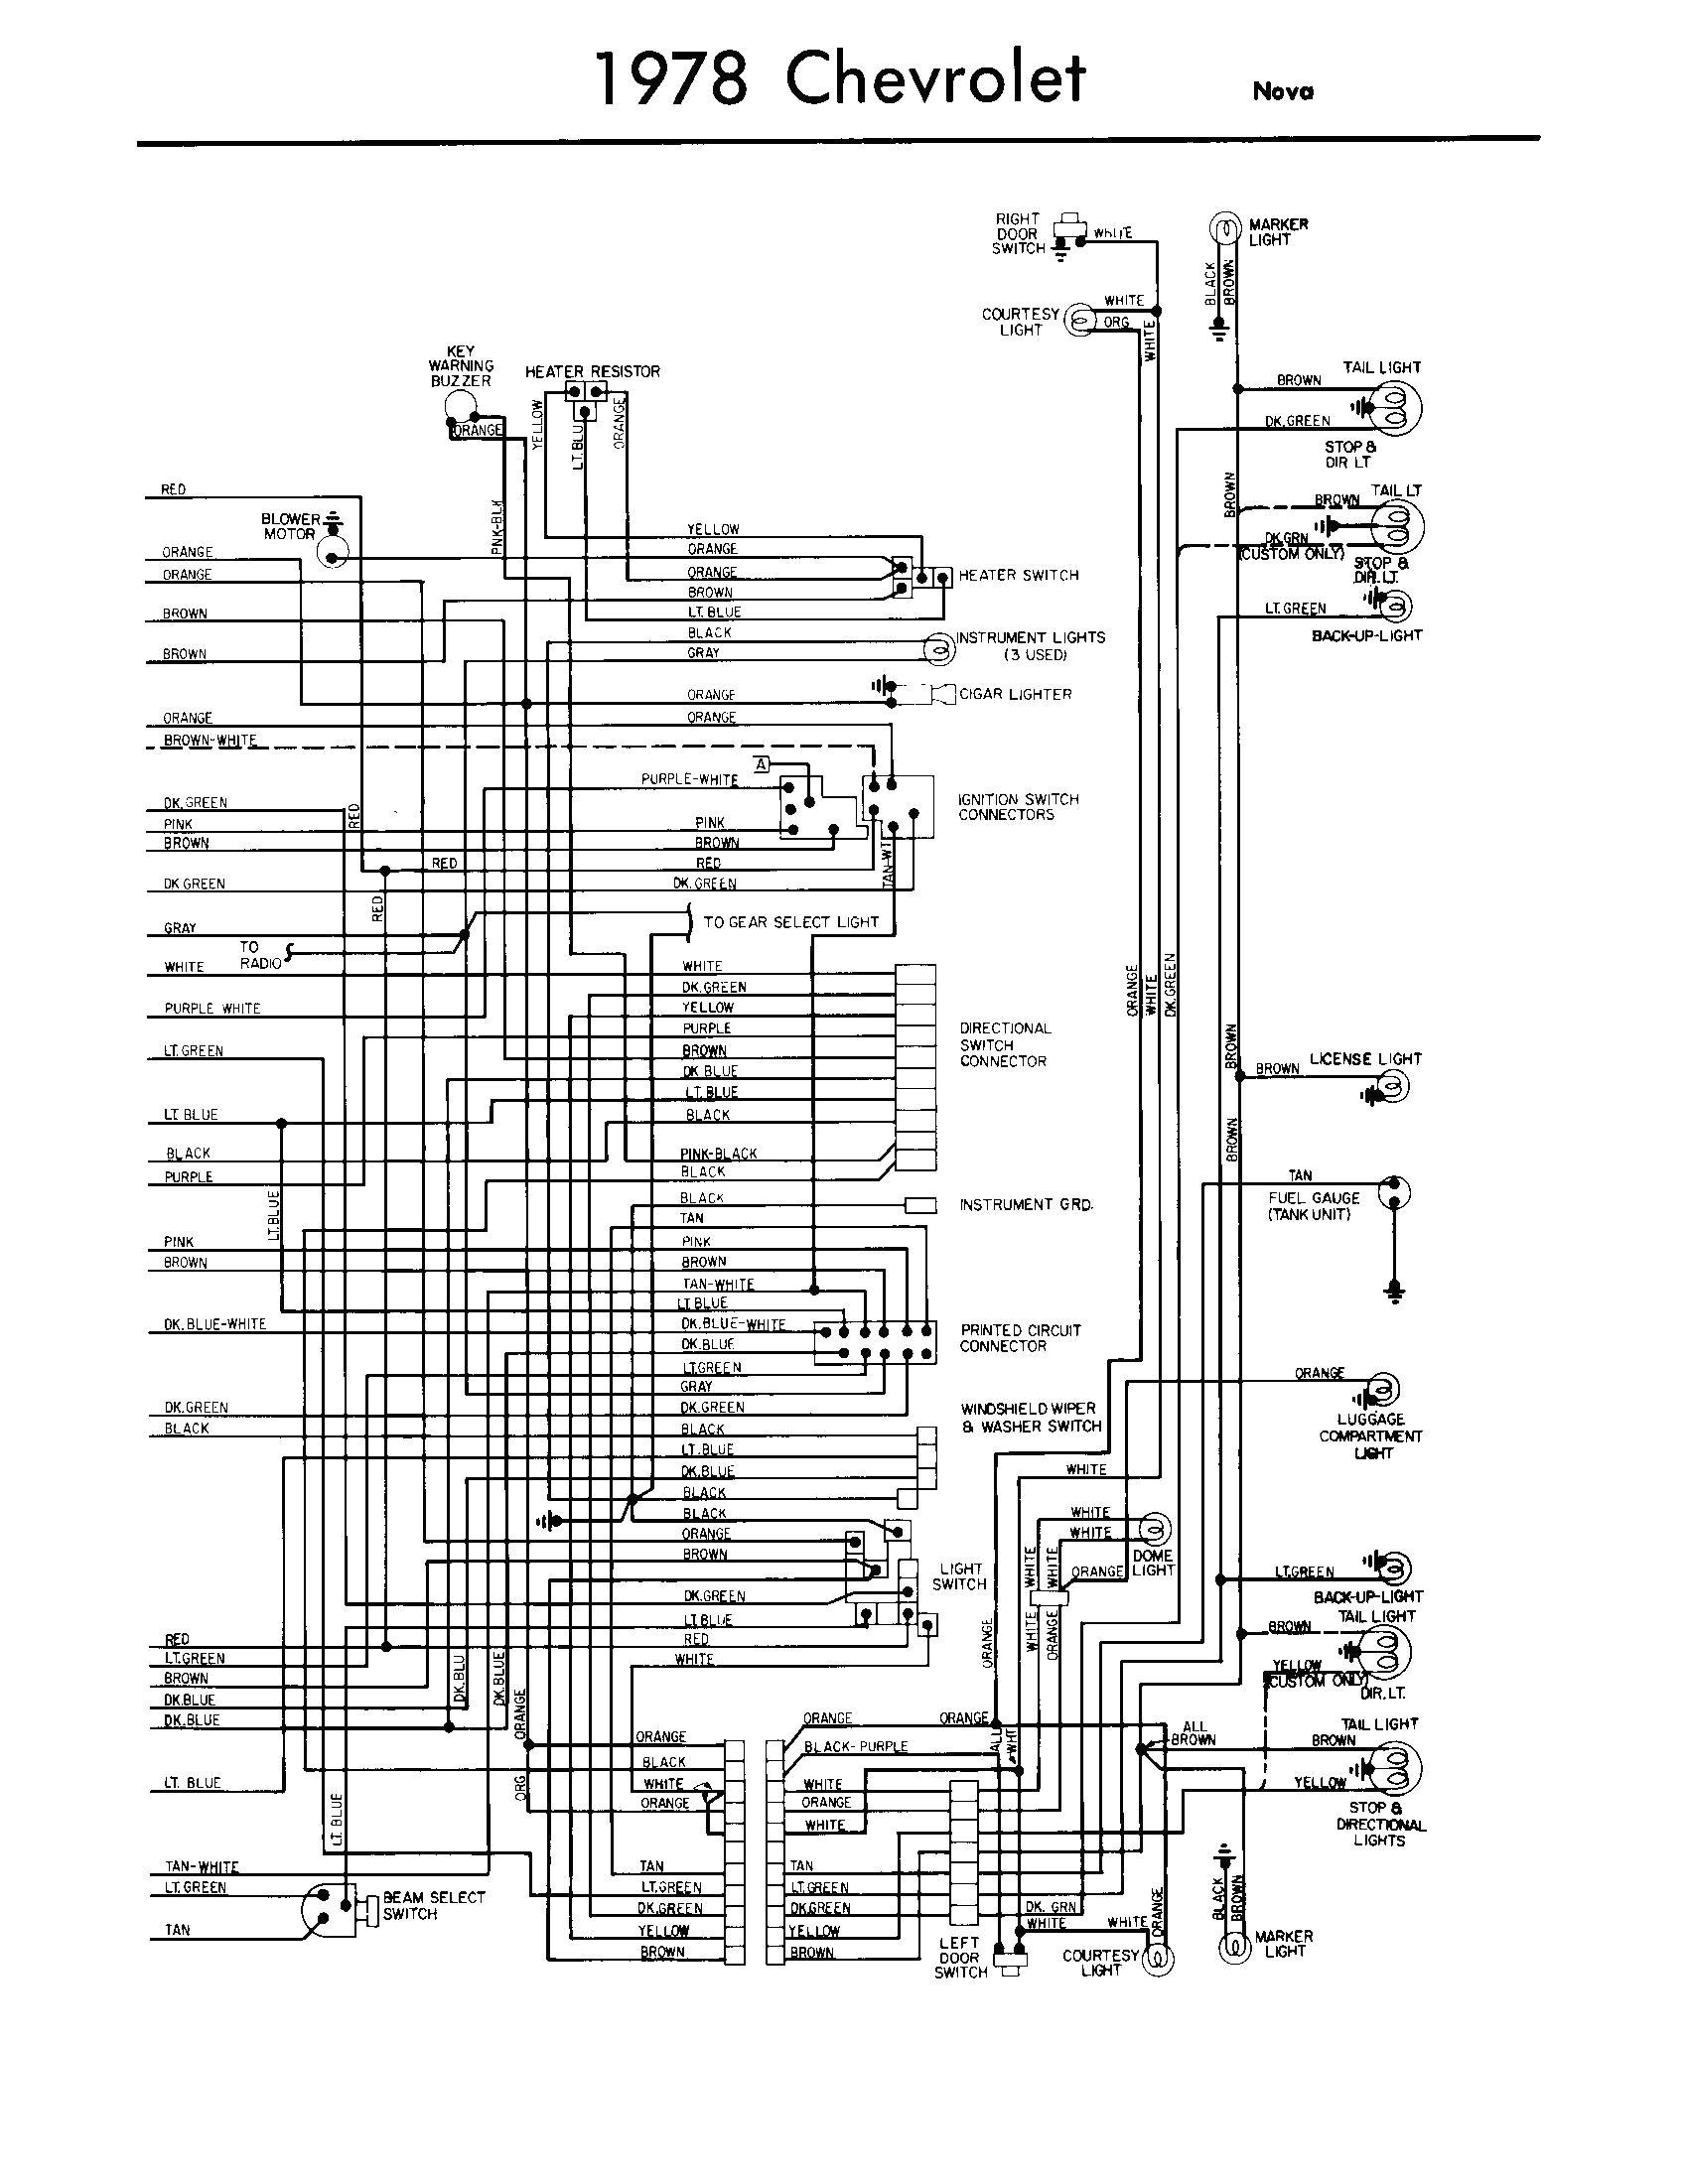 1977 corvette wiring diagram pdf wiring diagram post 1966 corvette ac wiring wiring diagram view 1977